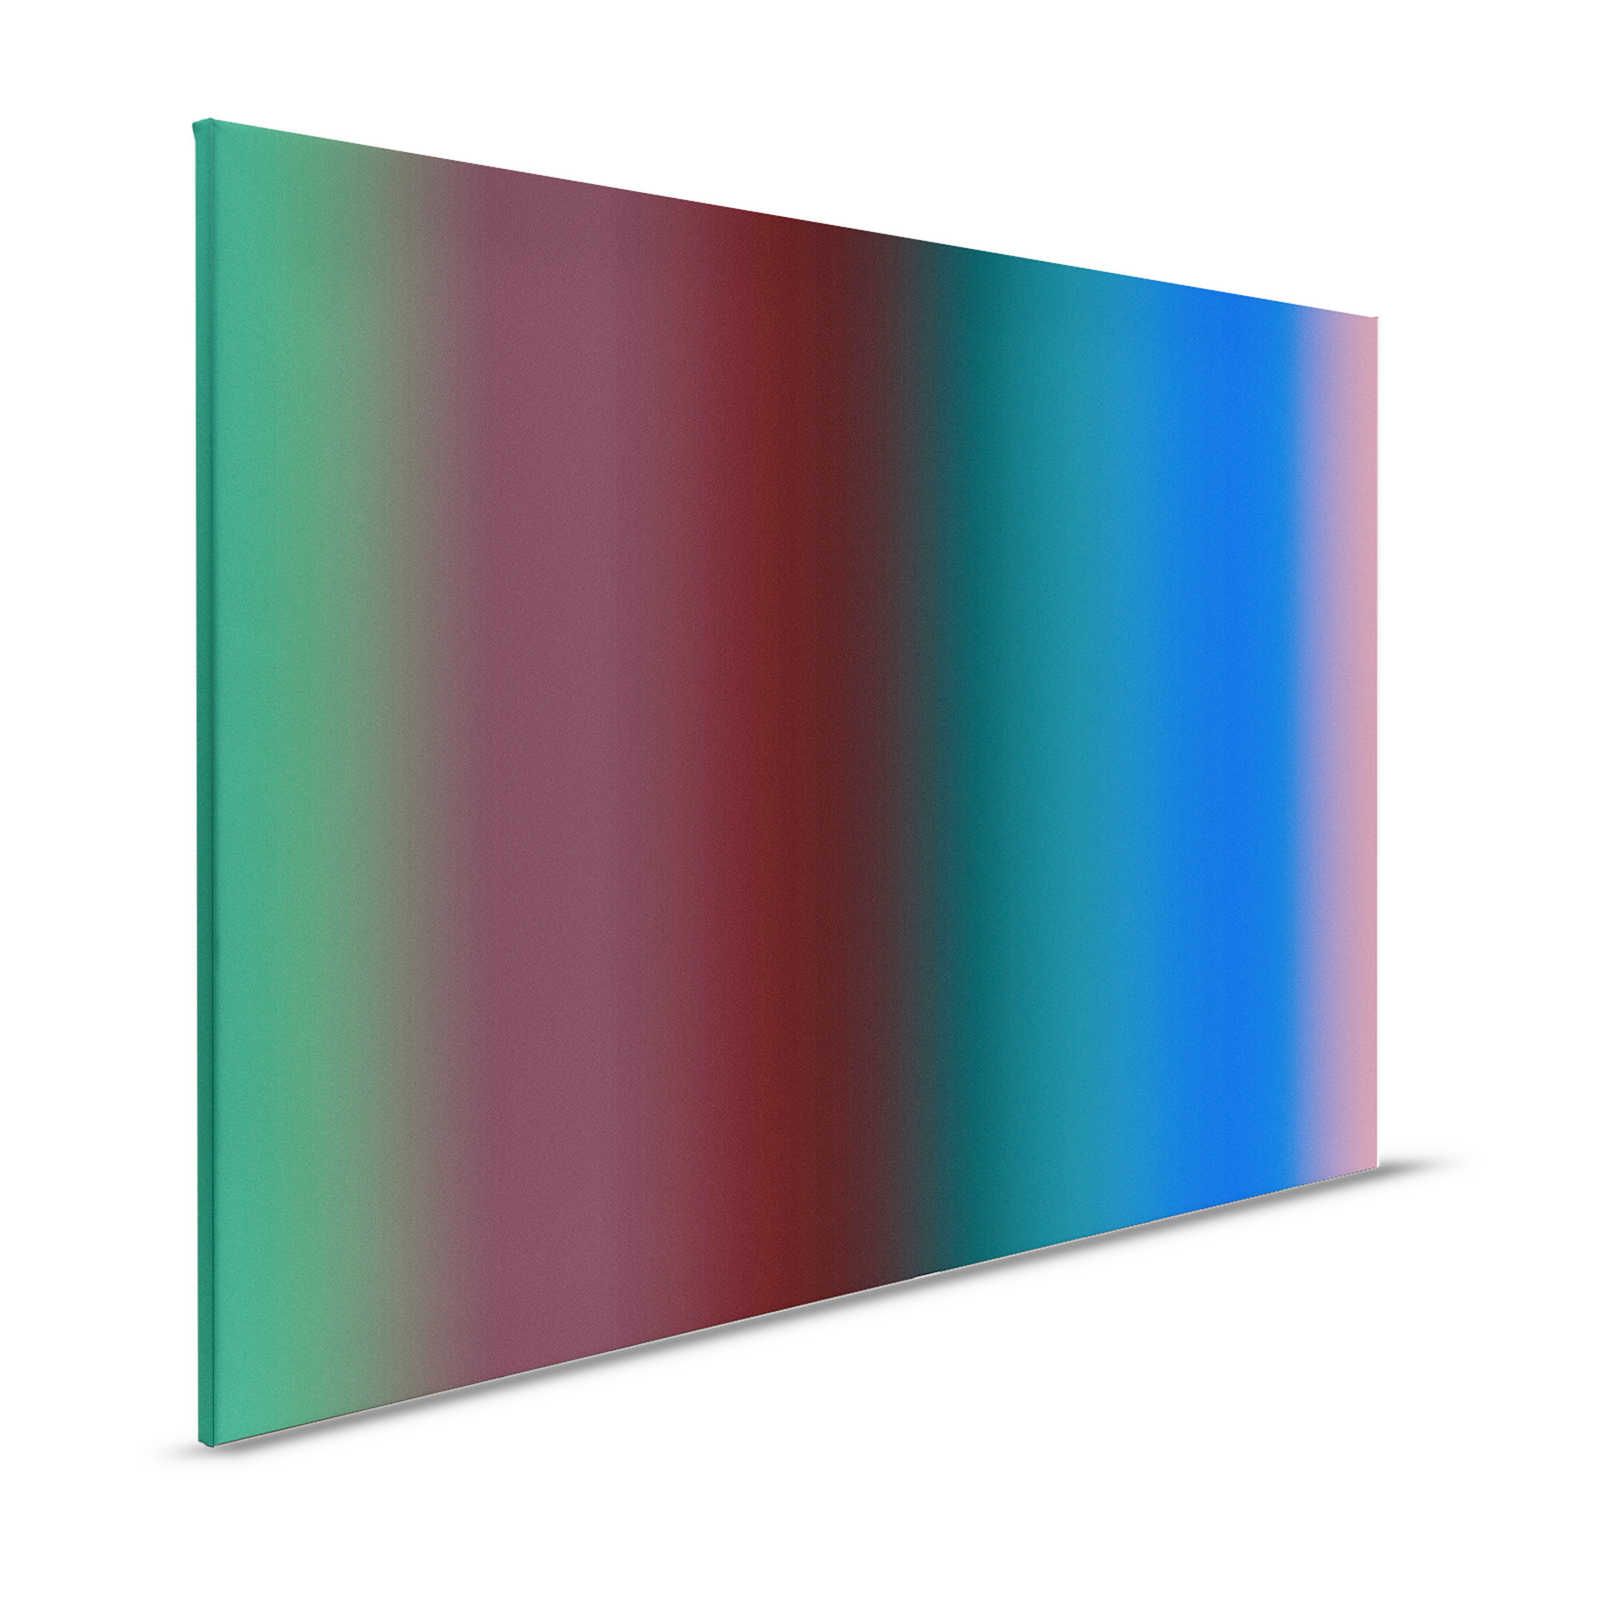 Over the Rainbow 2 - Farbverlauf Leinwandbild buntes Streifendesign – 1,20 m x 0,80 m
